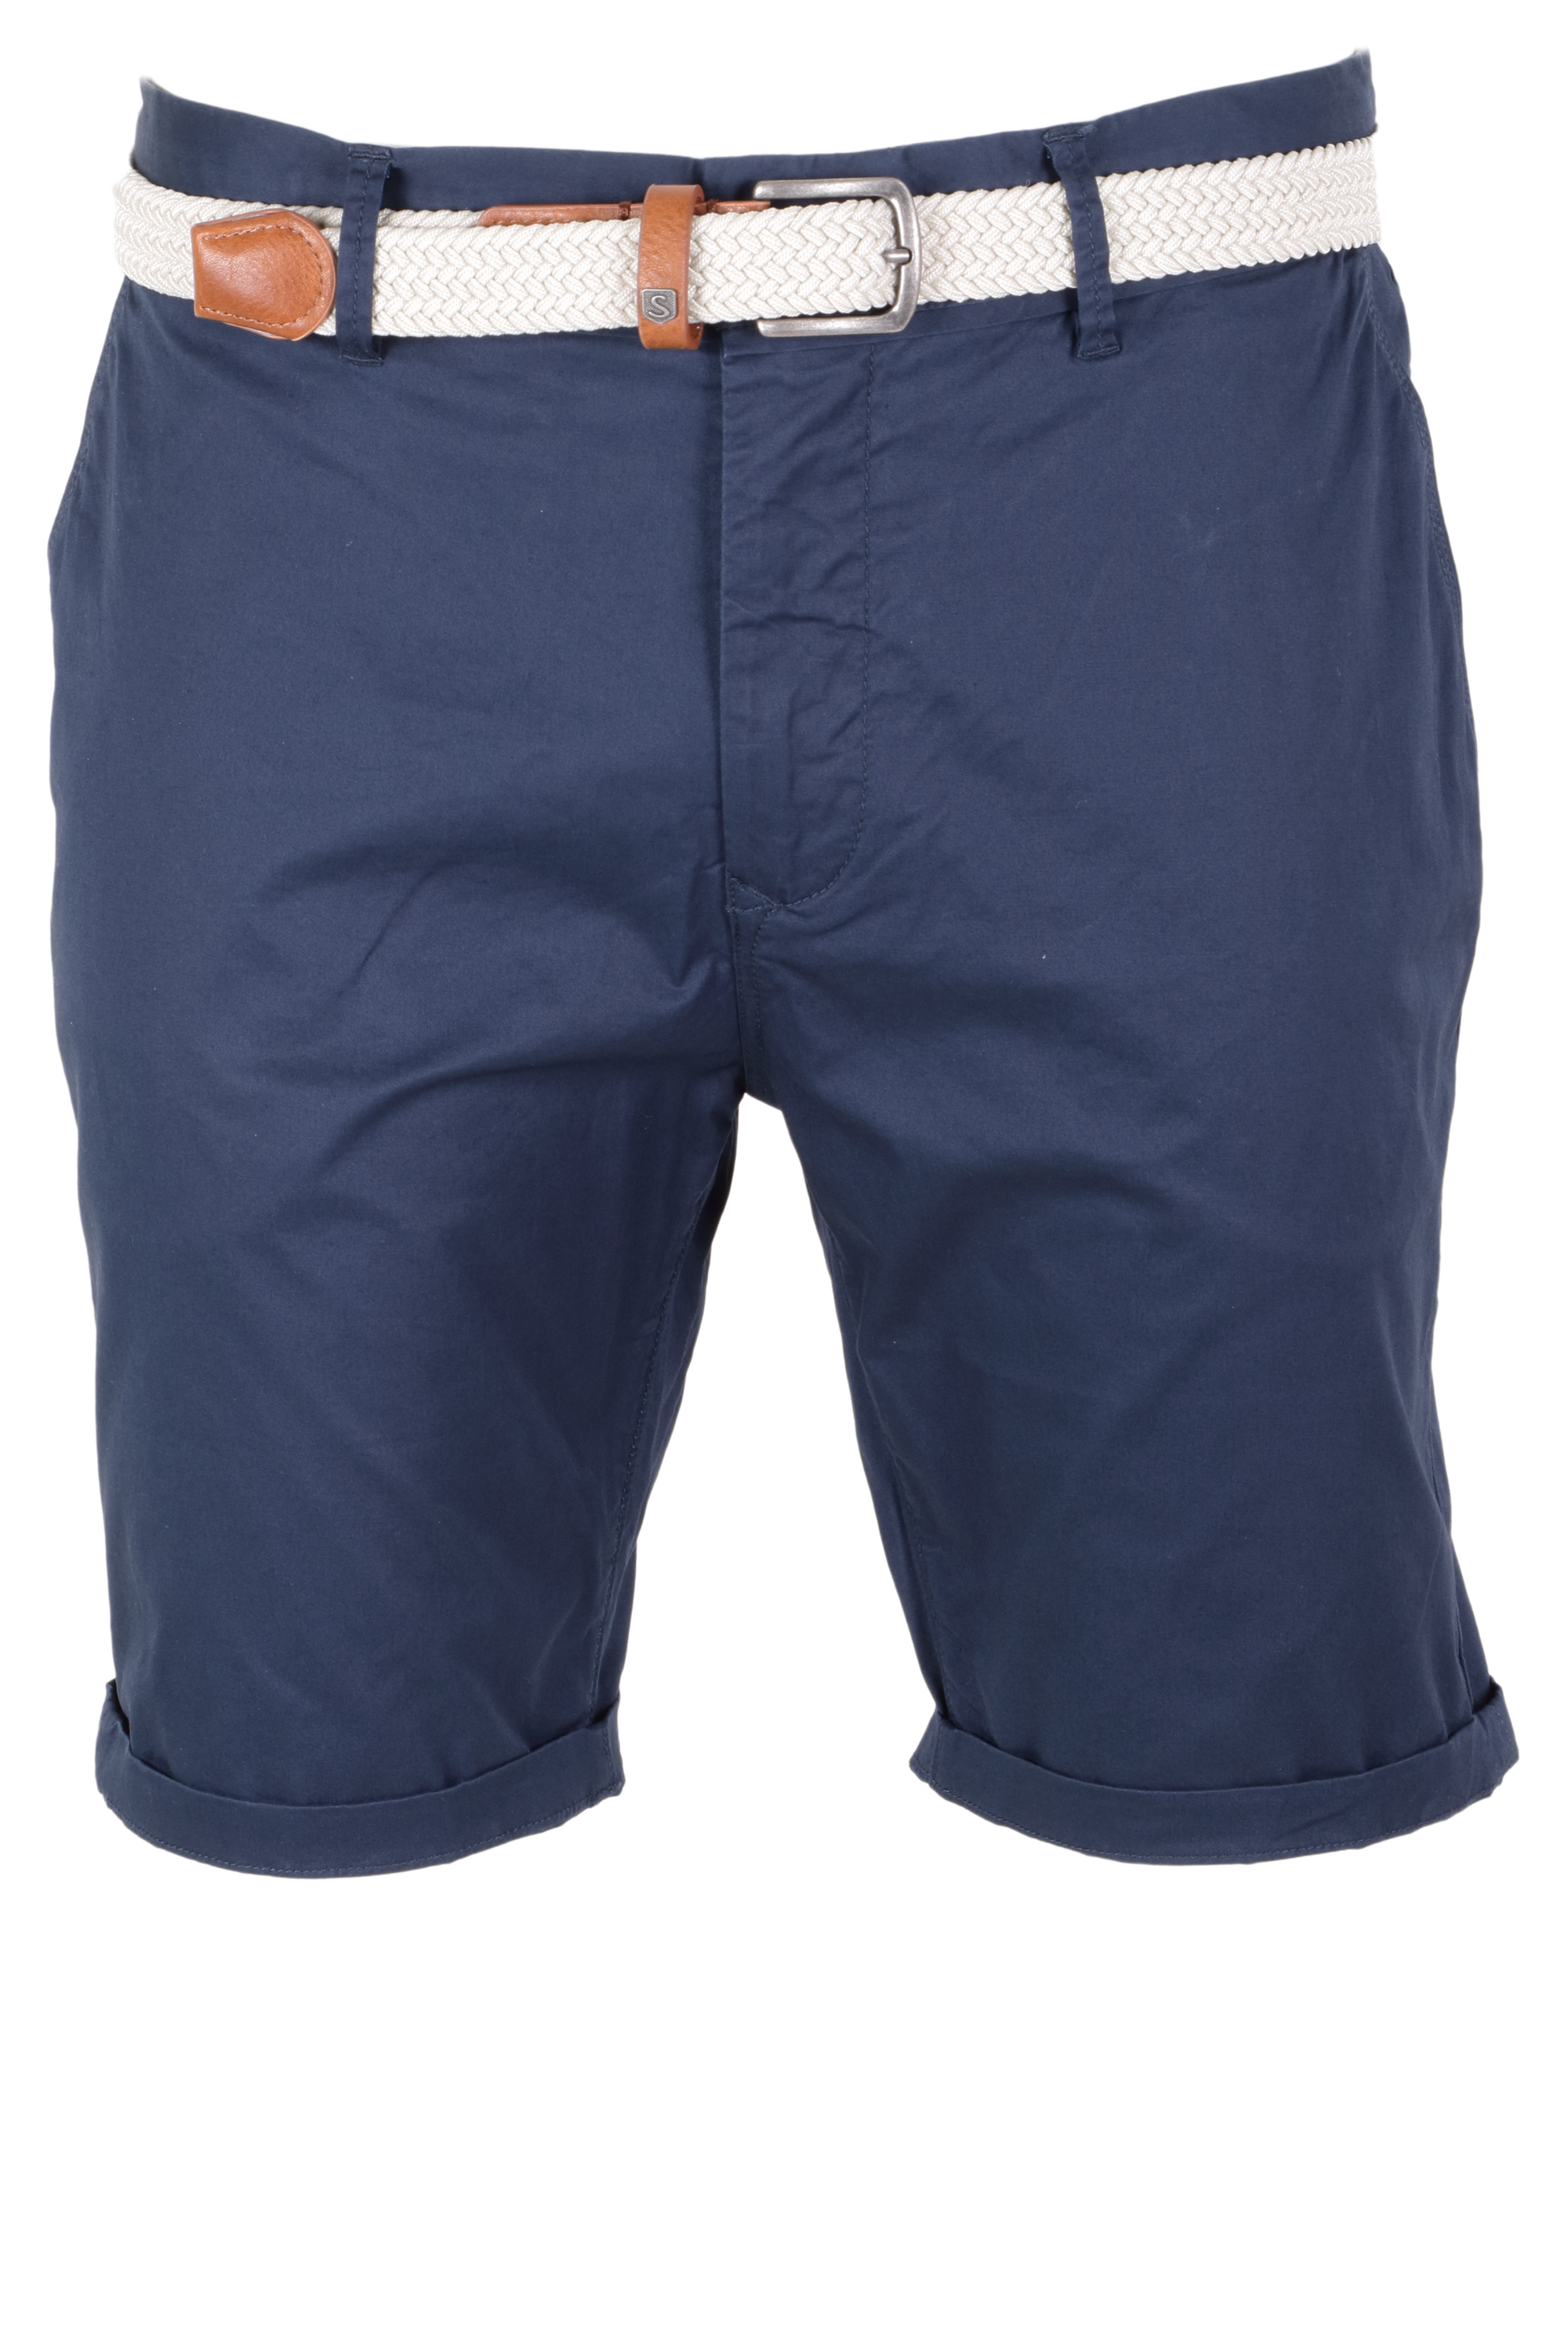 Sala Herren Bermuda Shorts mit Gürtel - dunkelblau 36